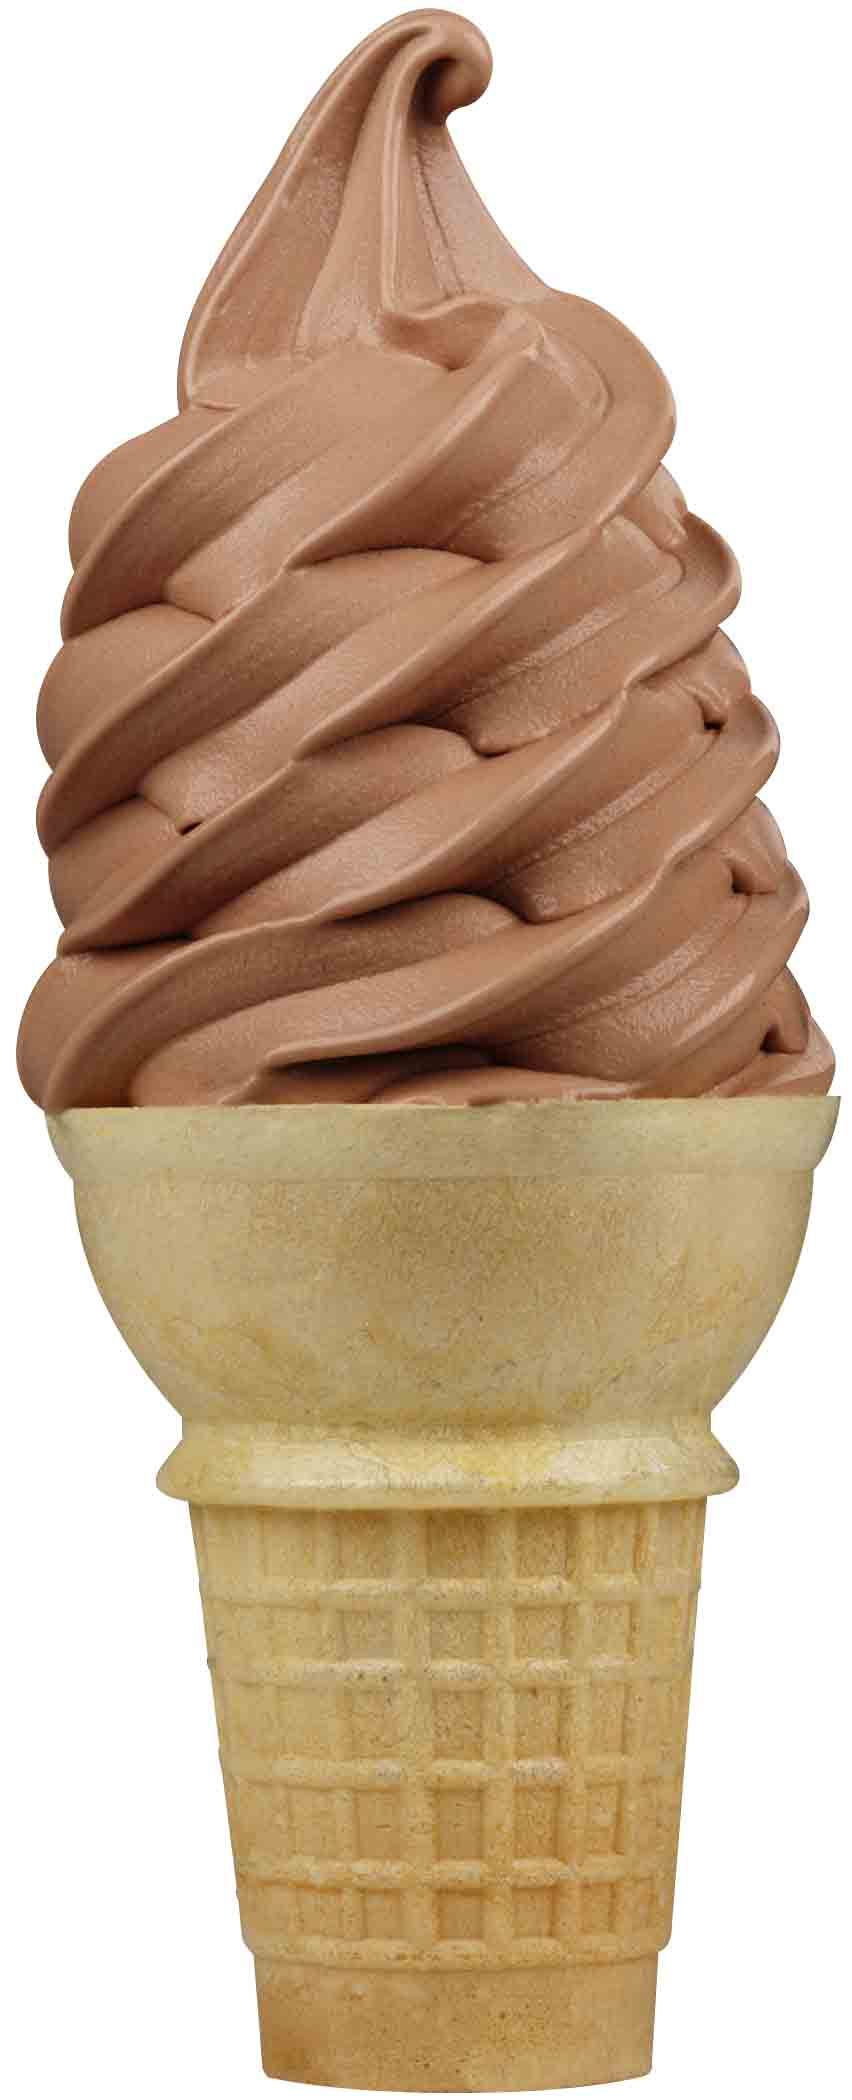 Do you prefer soft serve ice cream or hard ice cream? Poll Results